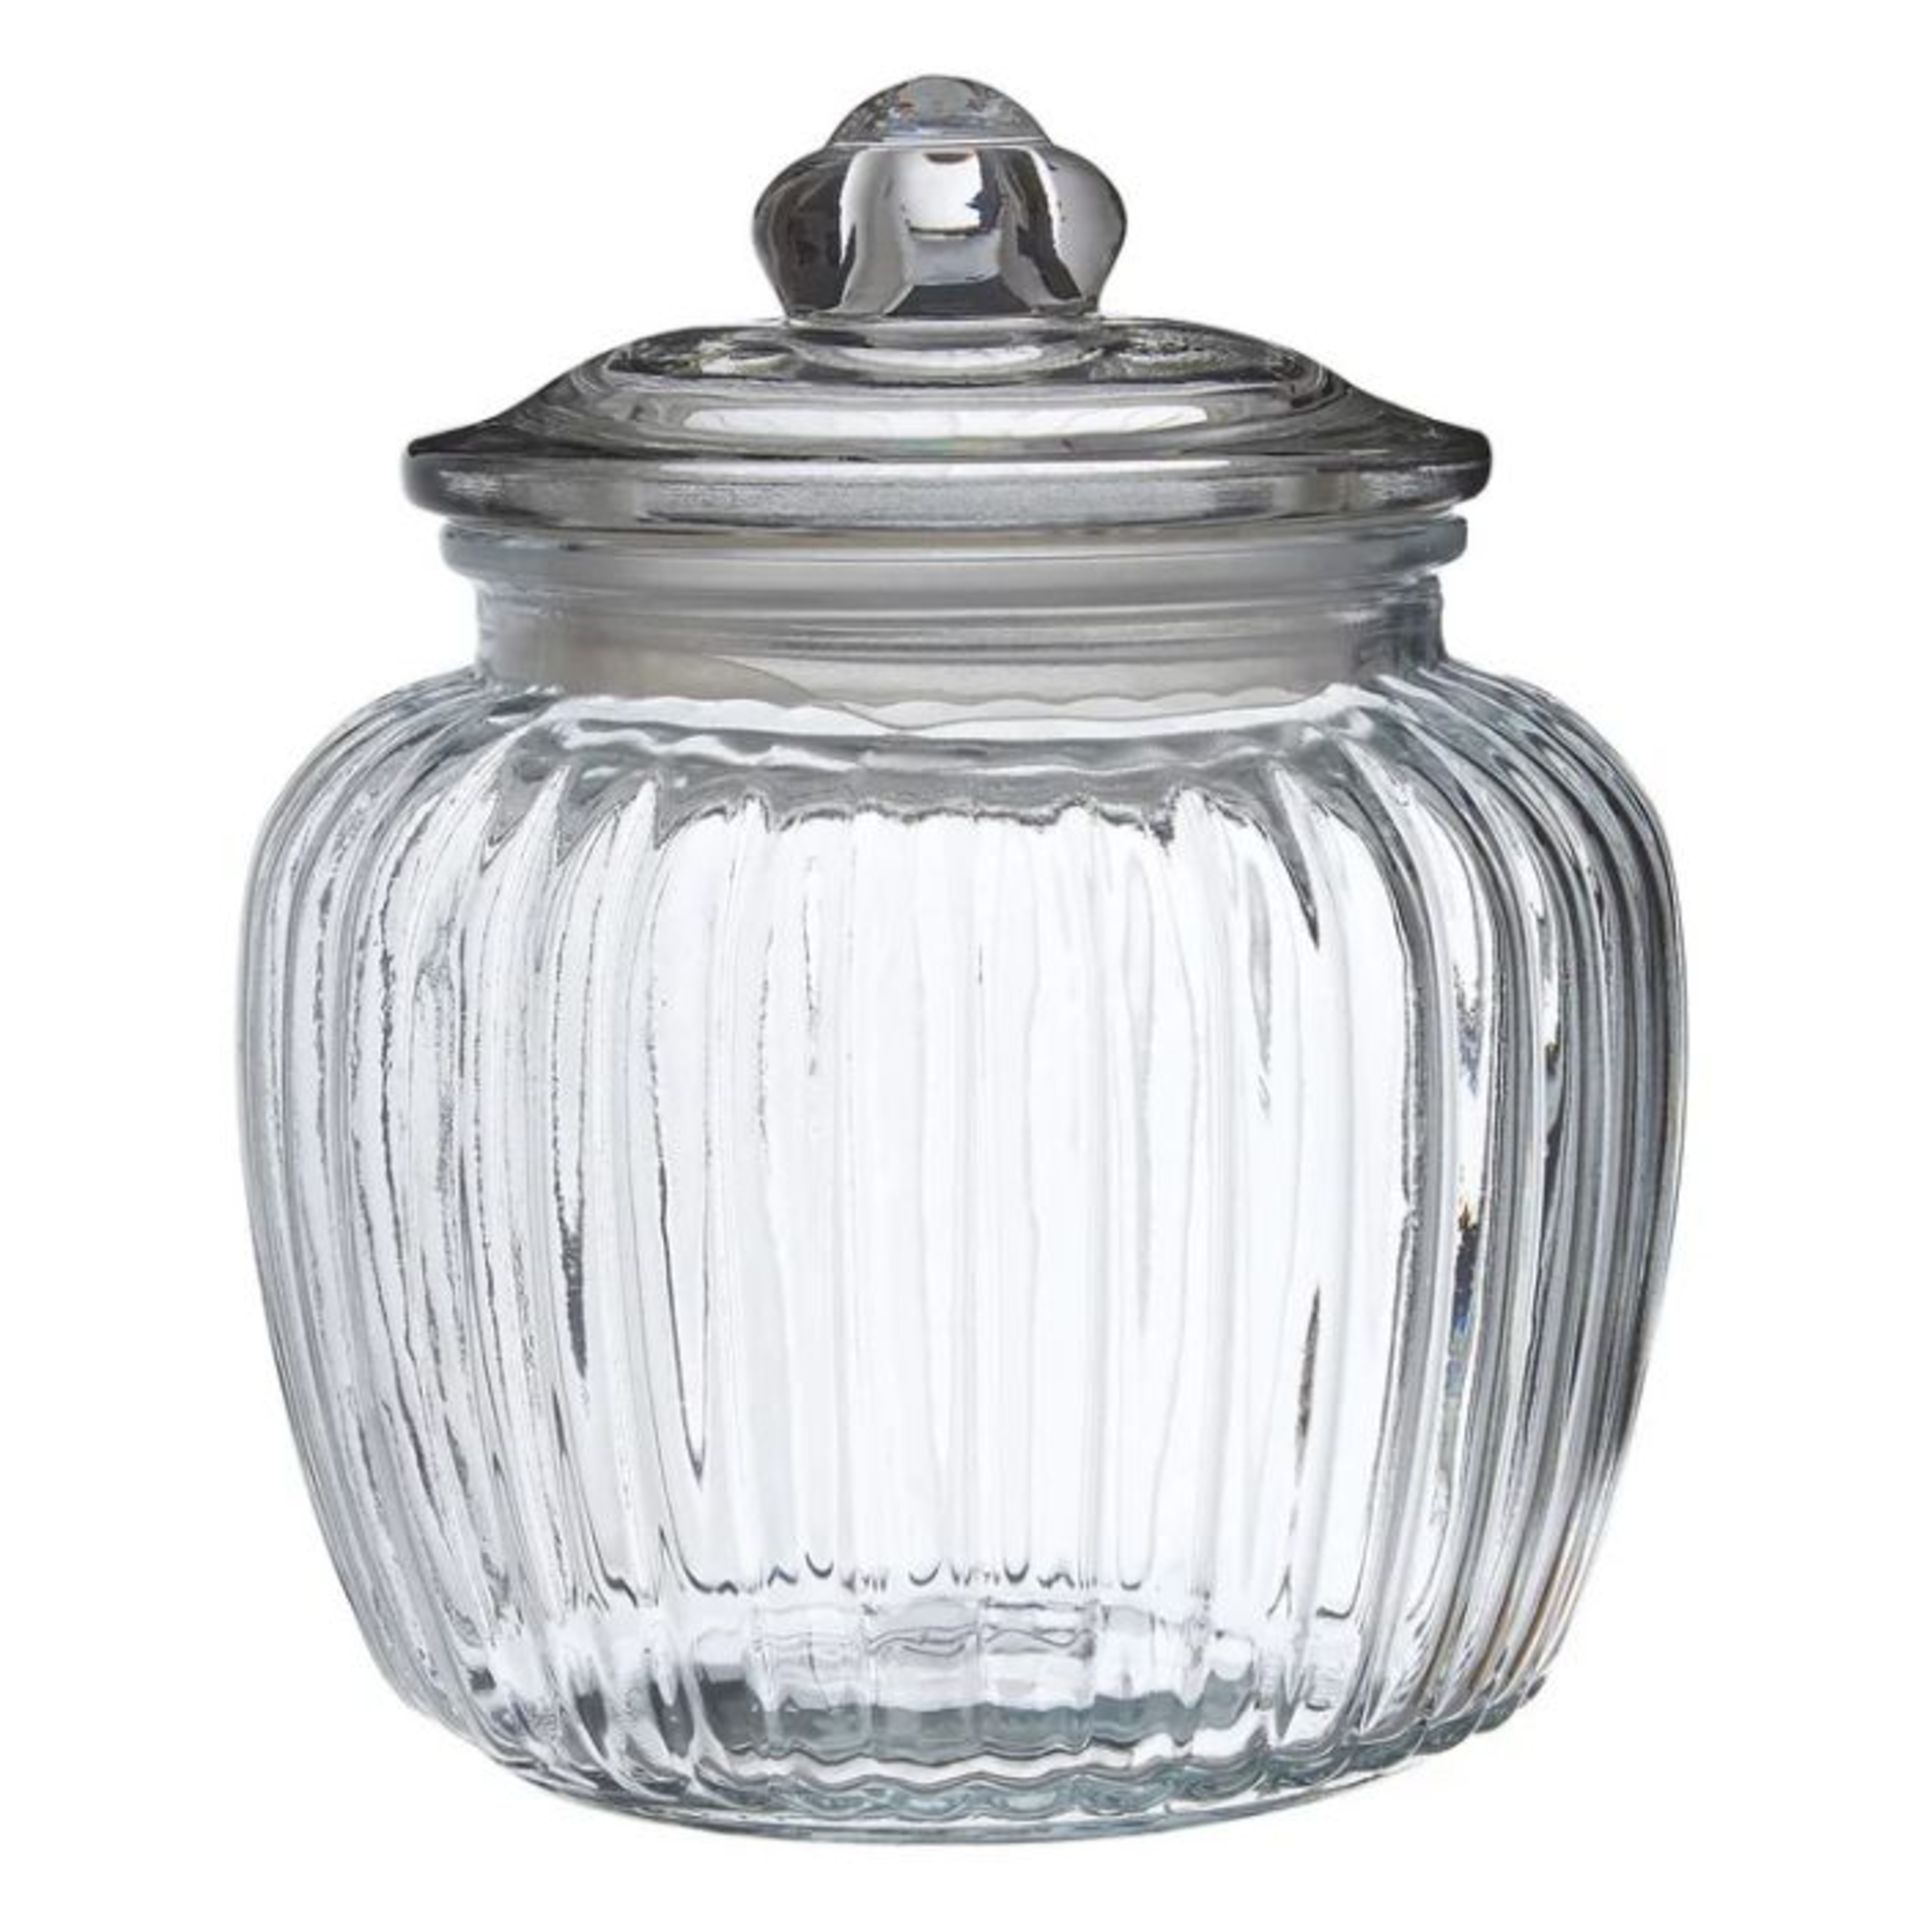 Marlow Home Co., Vintage Design Glass Storage Jar (18cm H X 14cm W X 14cm D) - RRP £18.99(OCJN4009 -